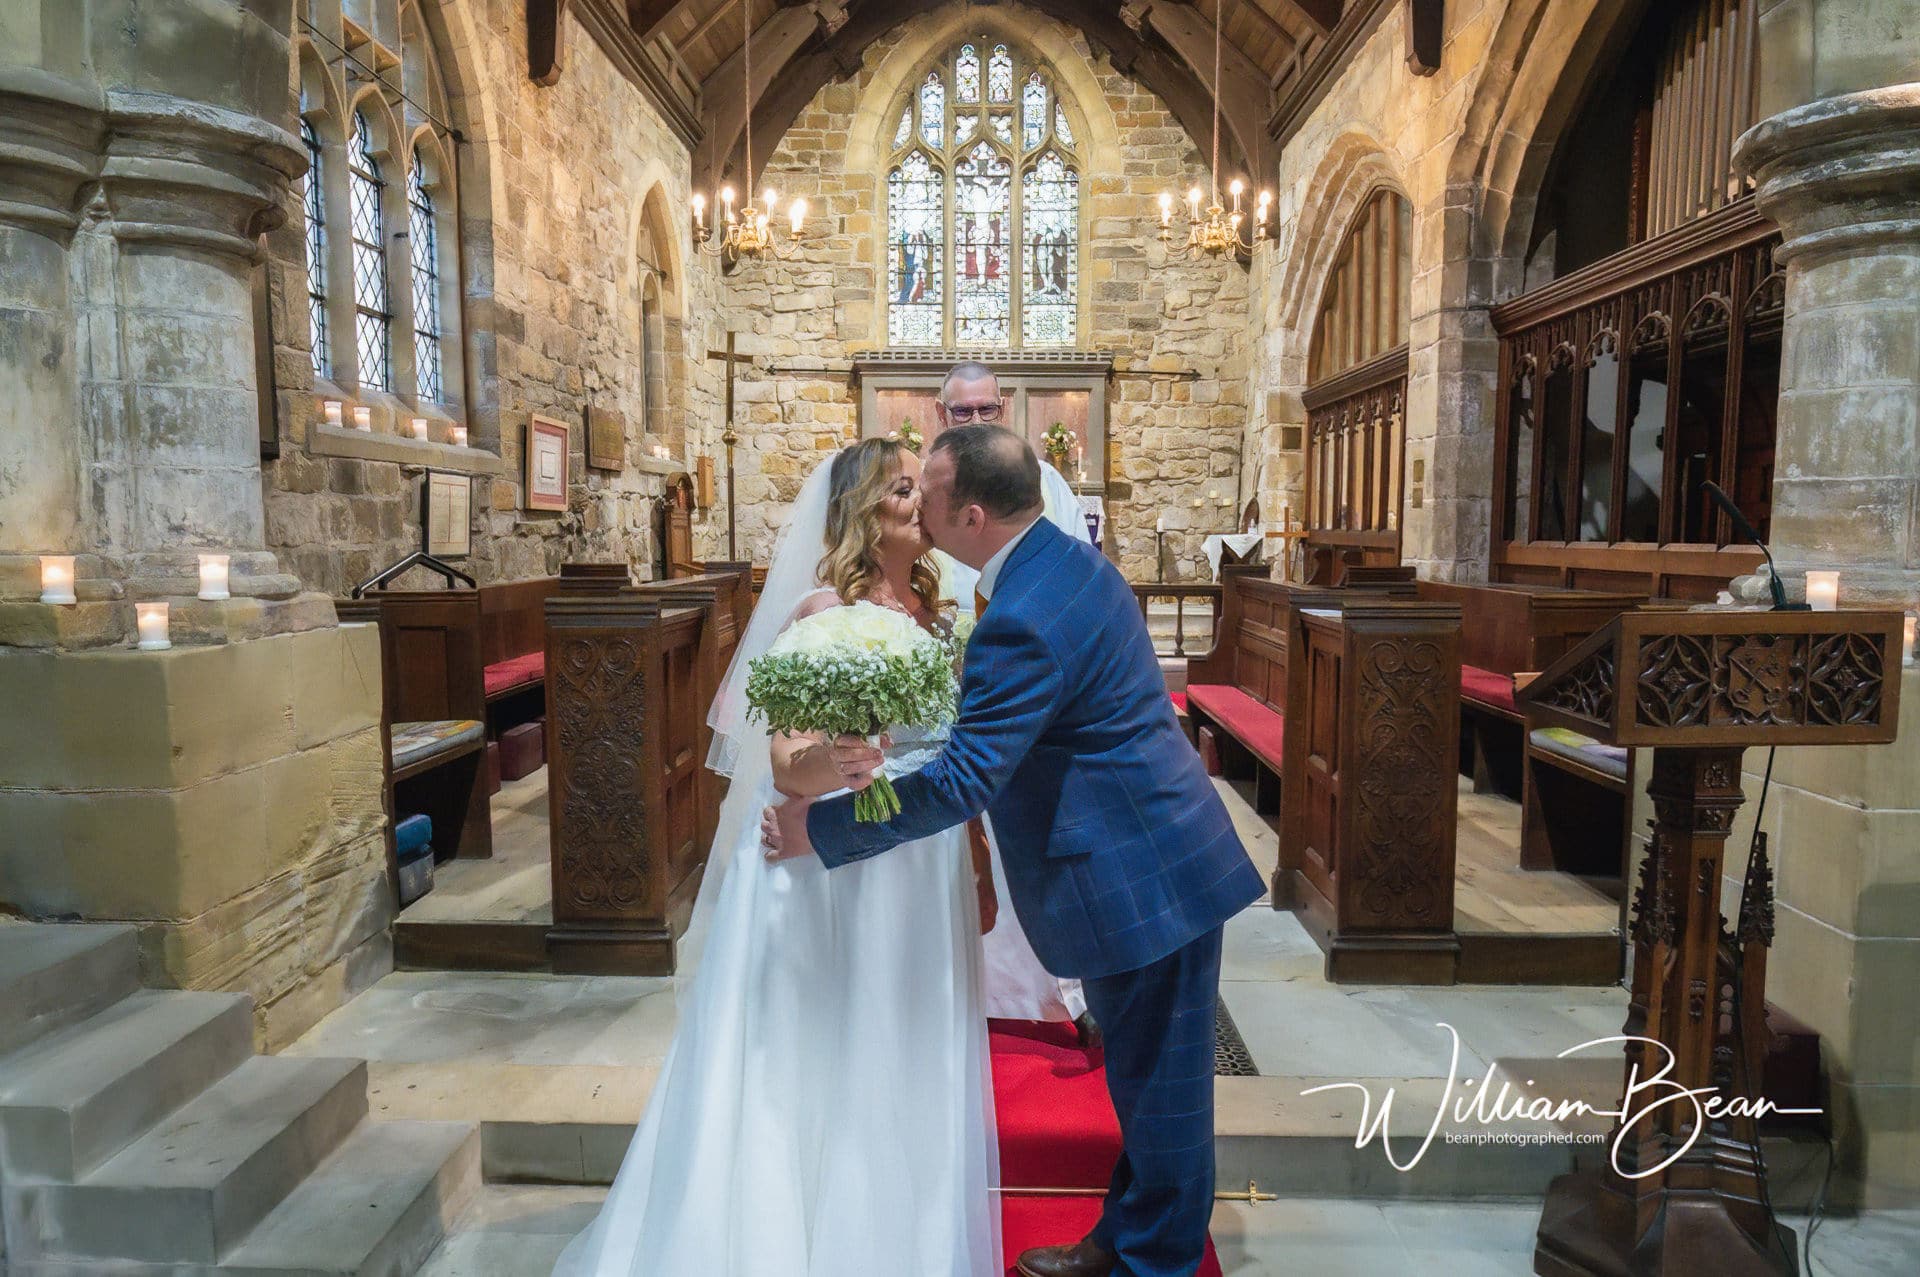 019-wedding-photographer-osmotherley-north-yorkshire